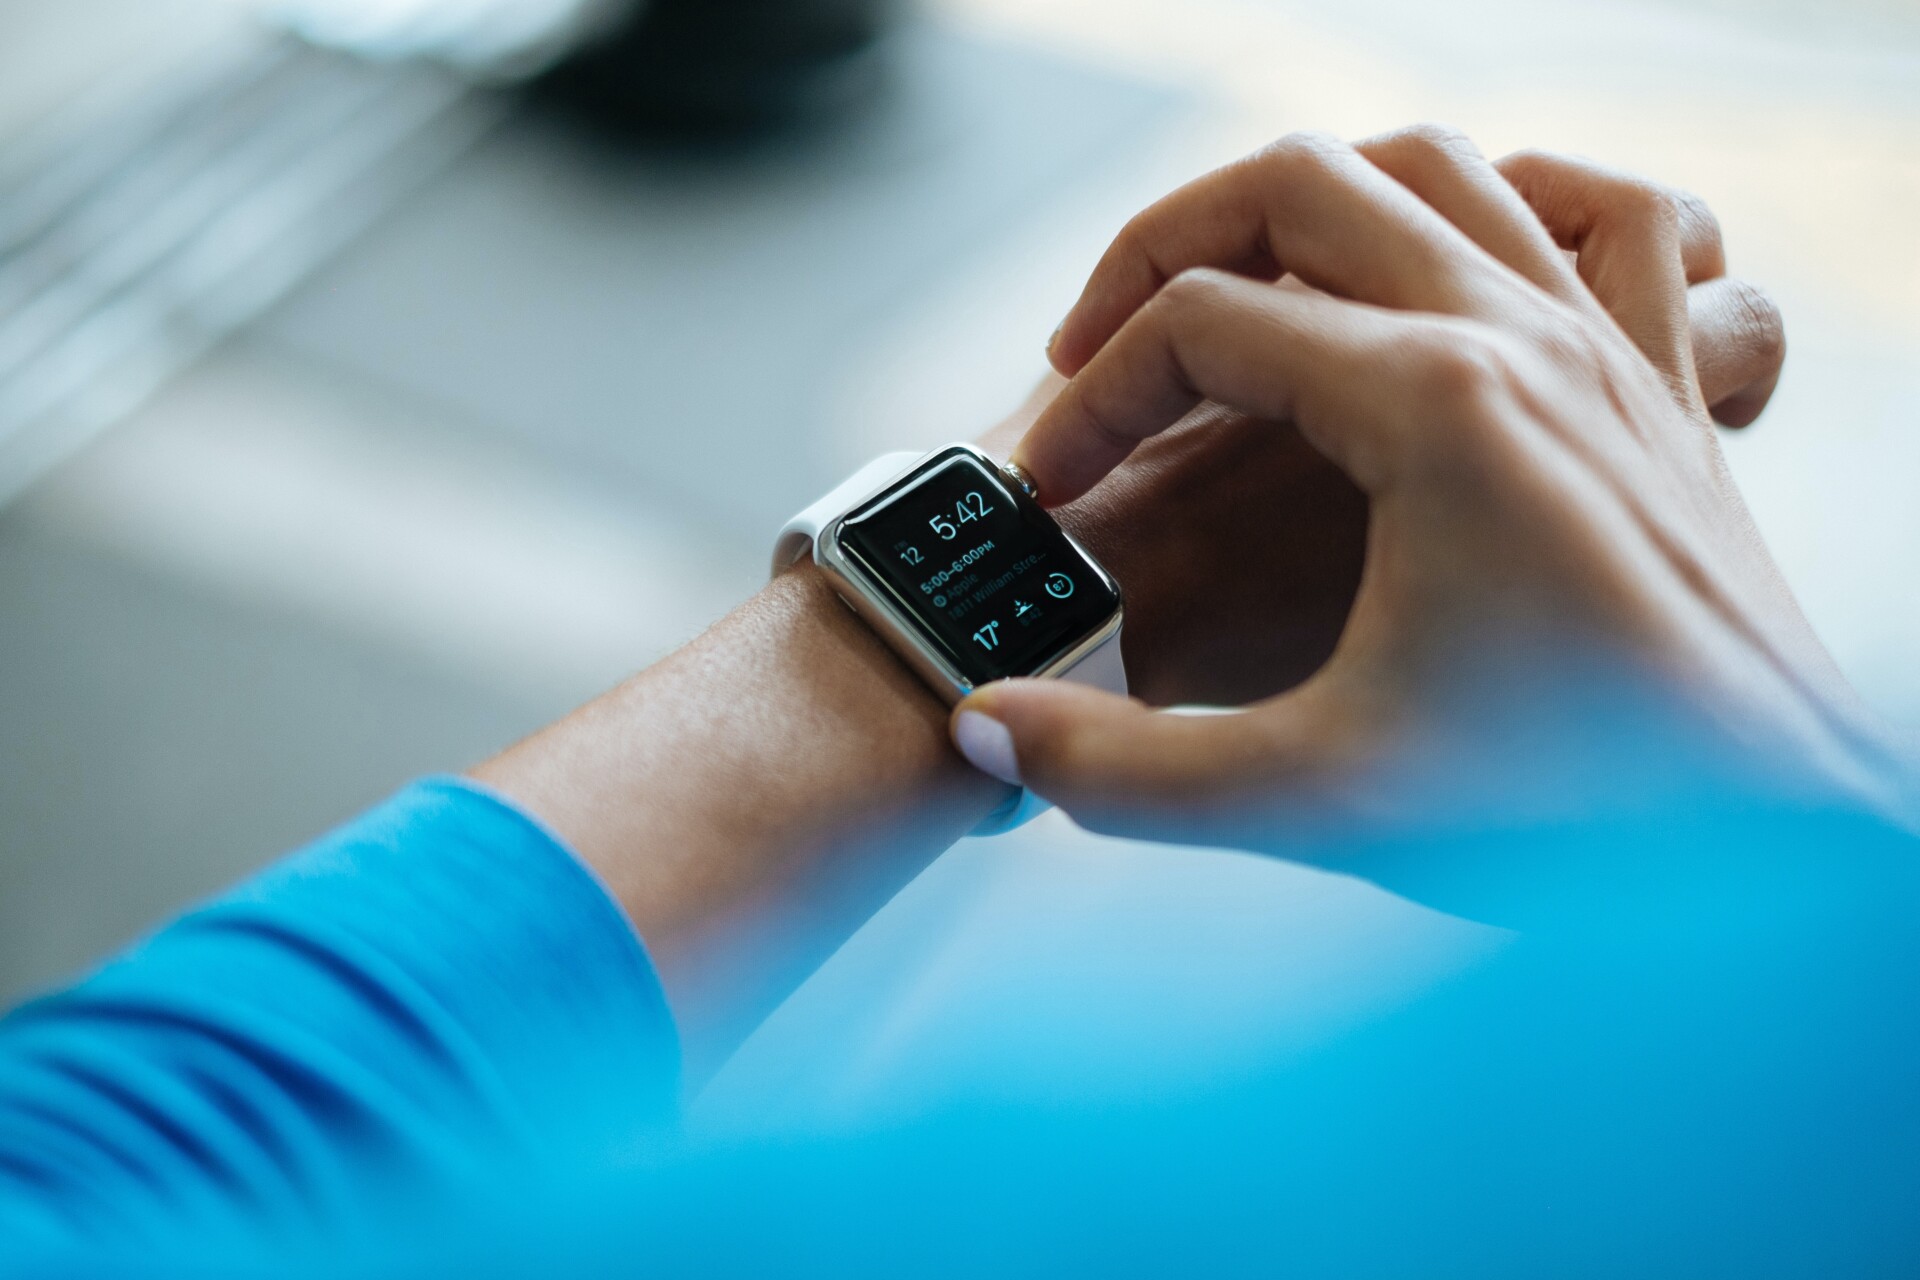 Smartwatch as a wearable technology